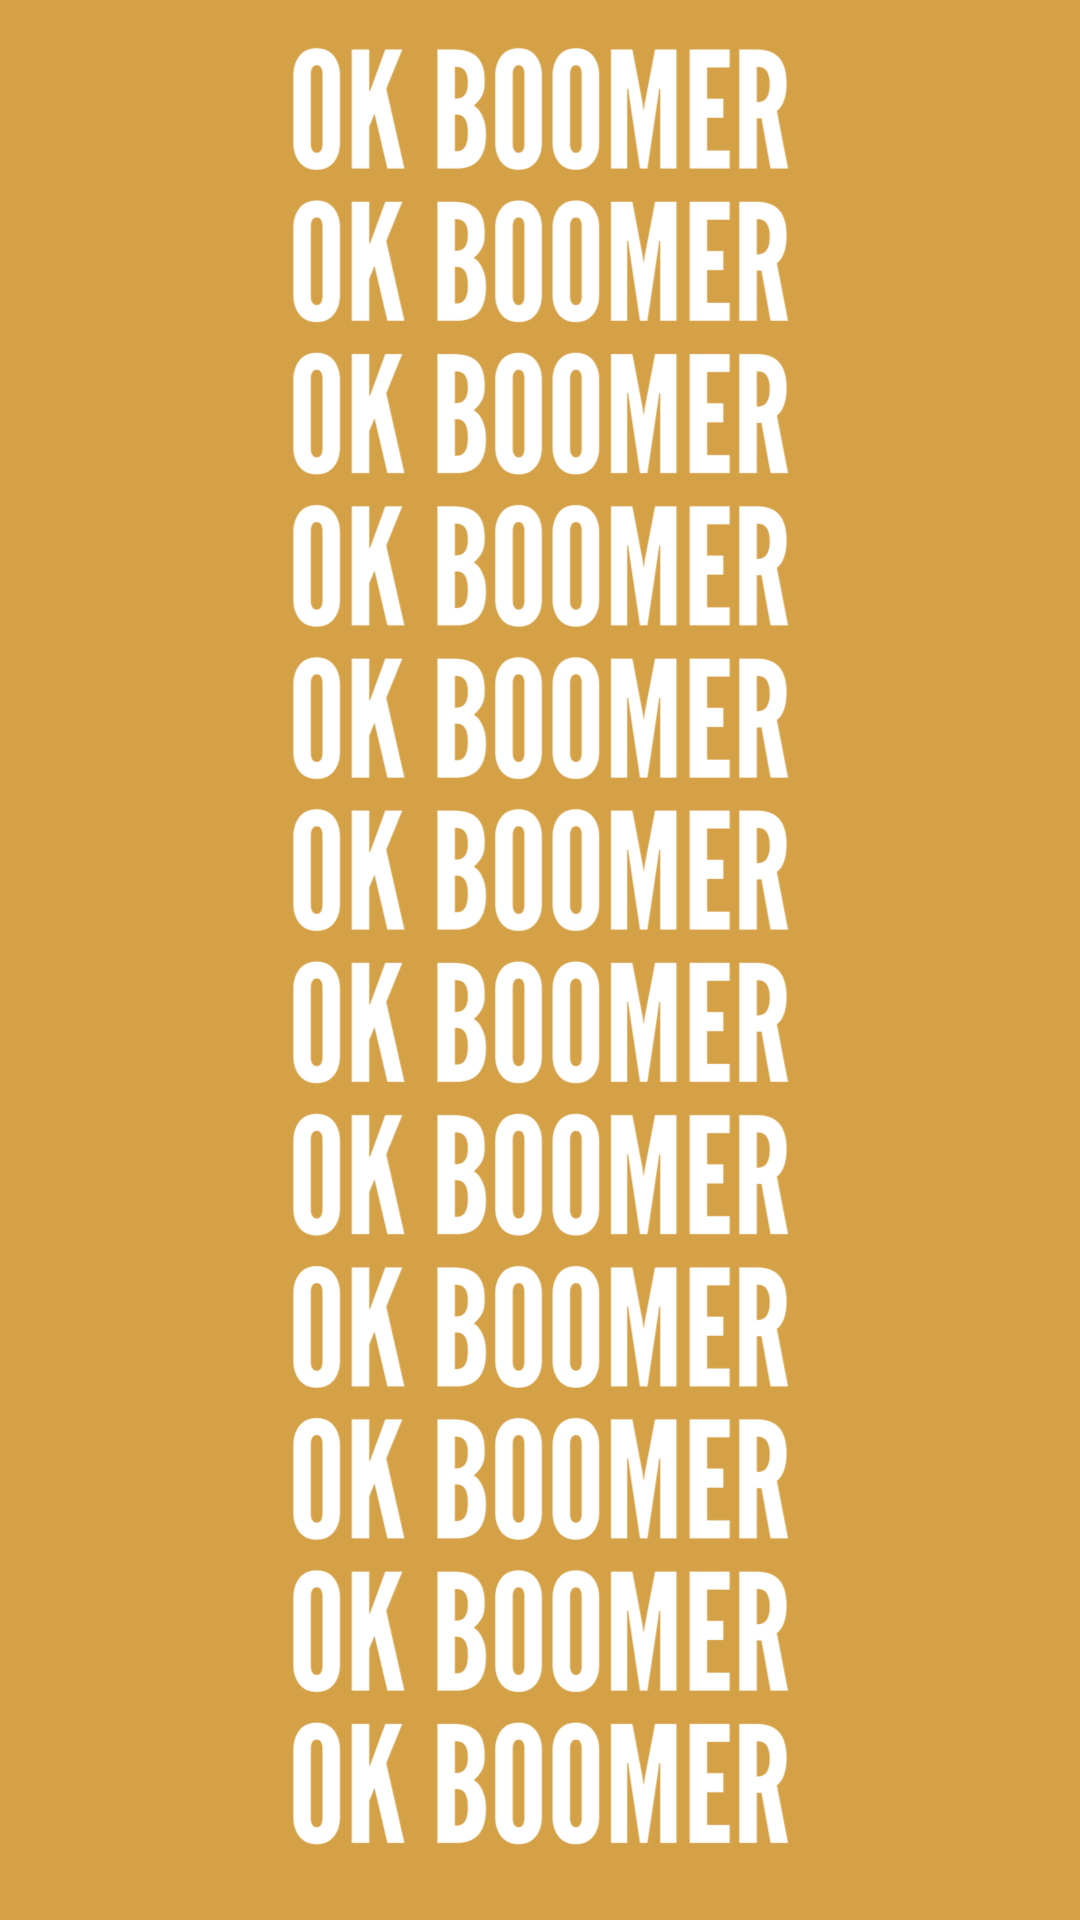 ok boomer wallpaper #okboomer. Funny iphone wallpaper, iPhone